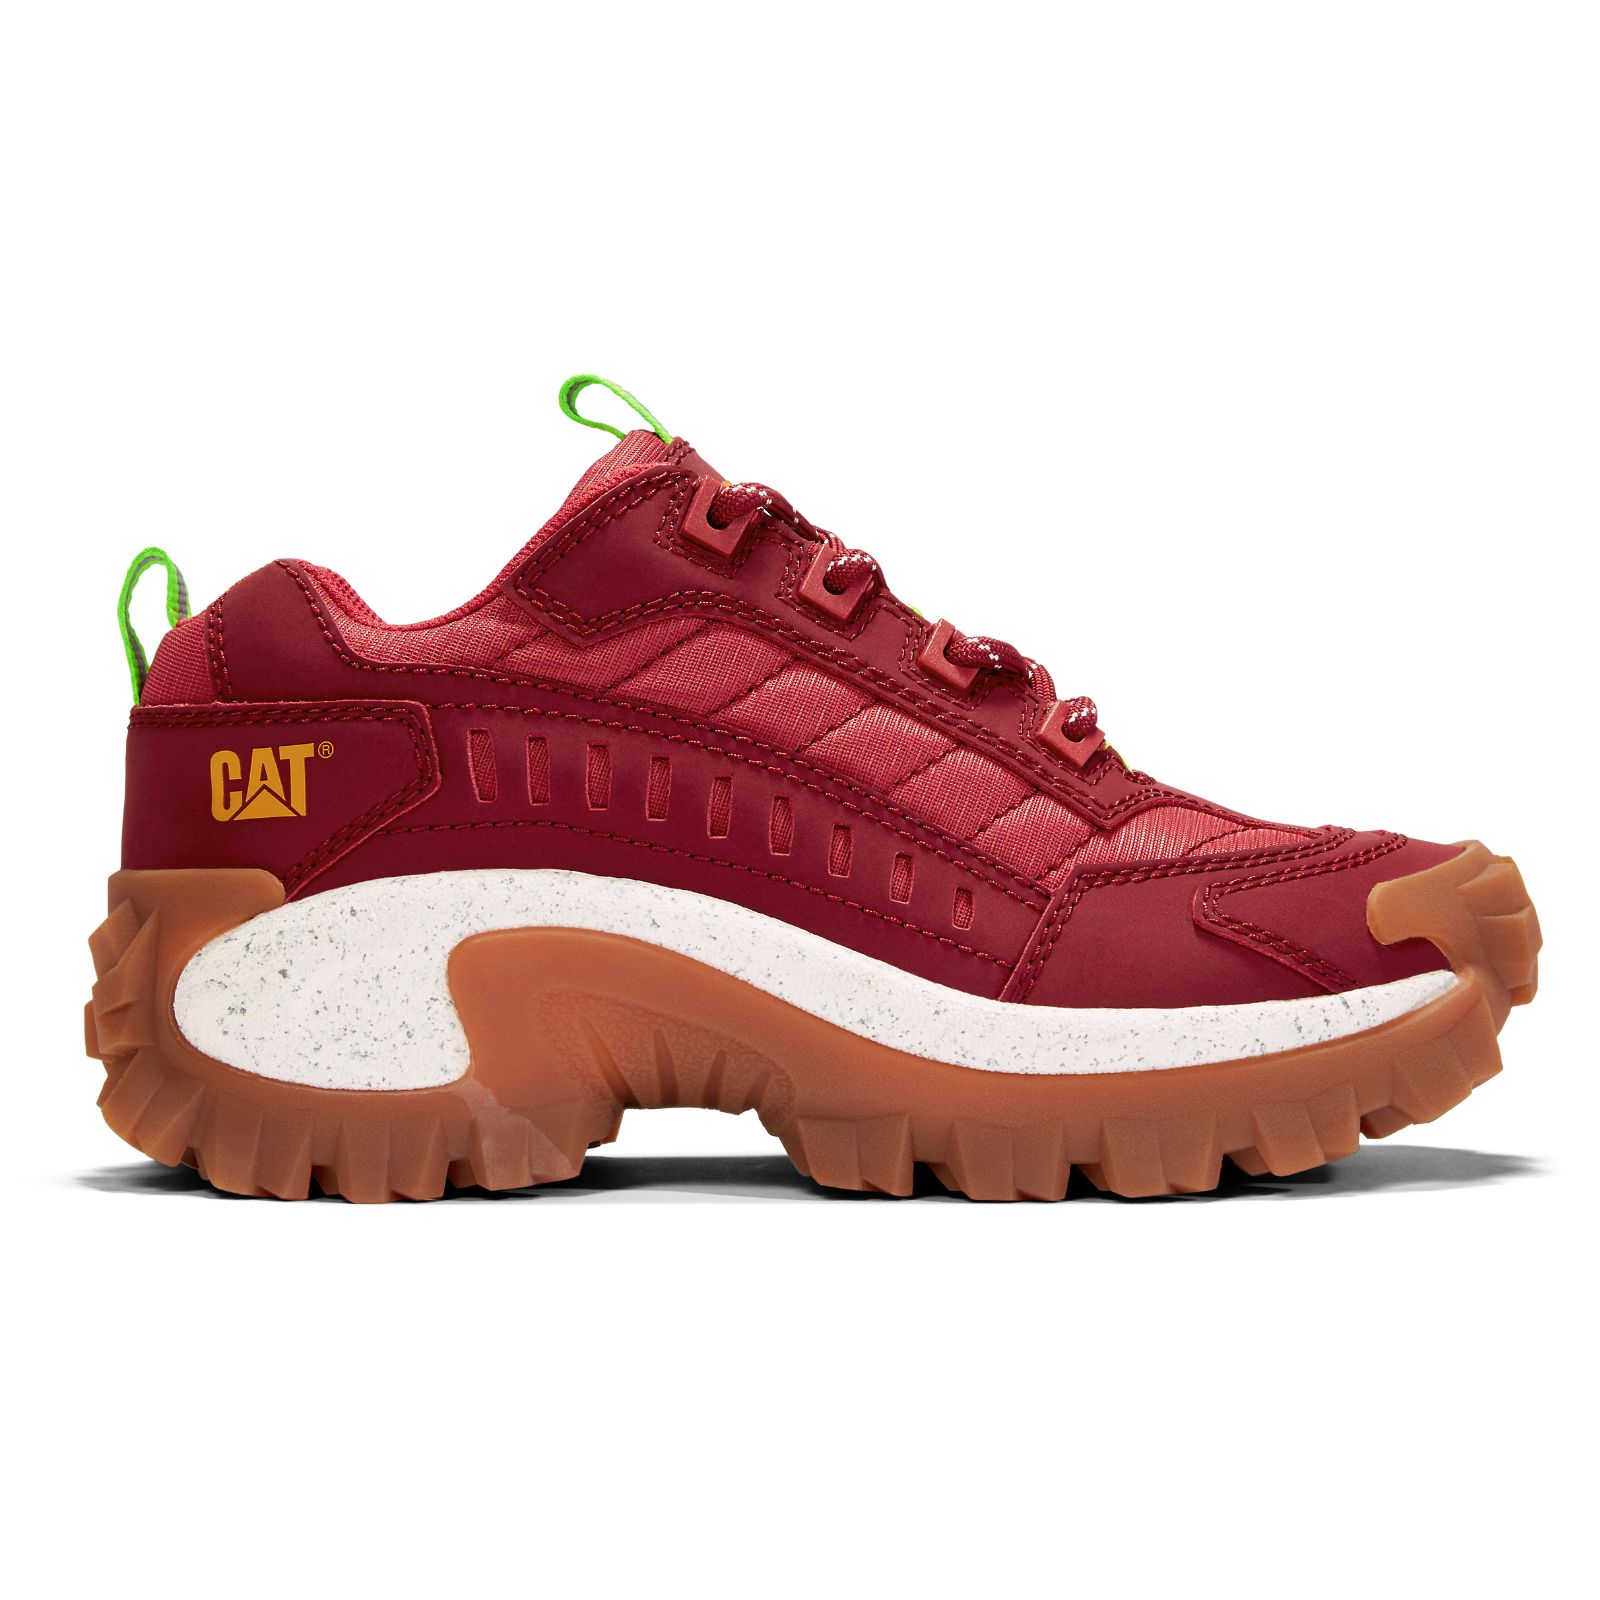 Caterpillar Casual Shoes Dubai - Caterpillar Intruder Mens - Red GQTRUF945